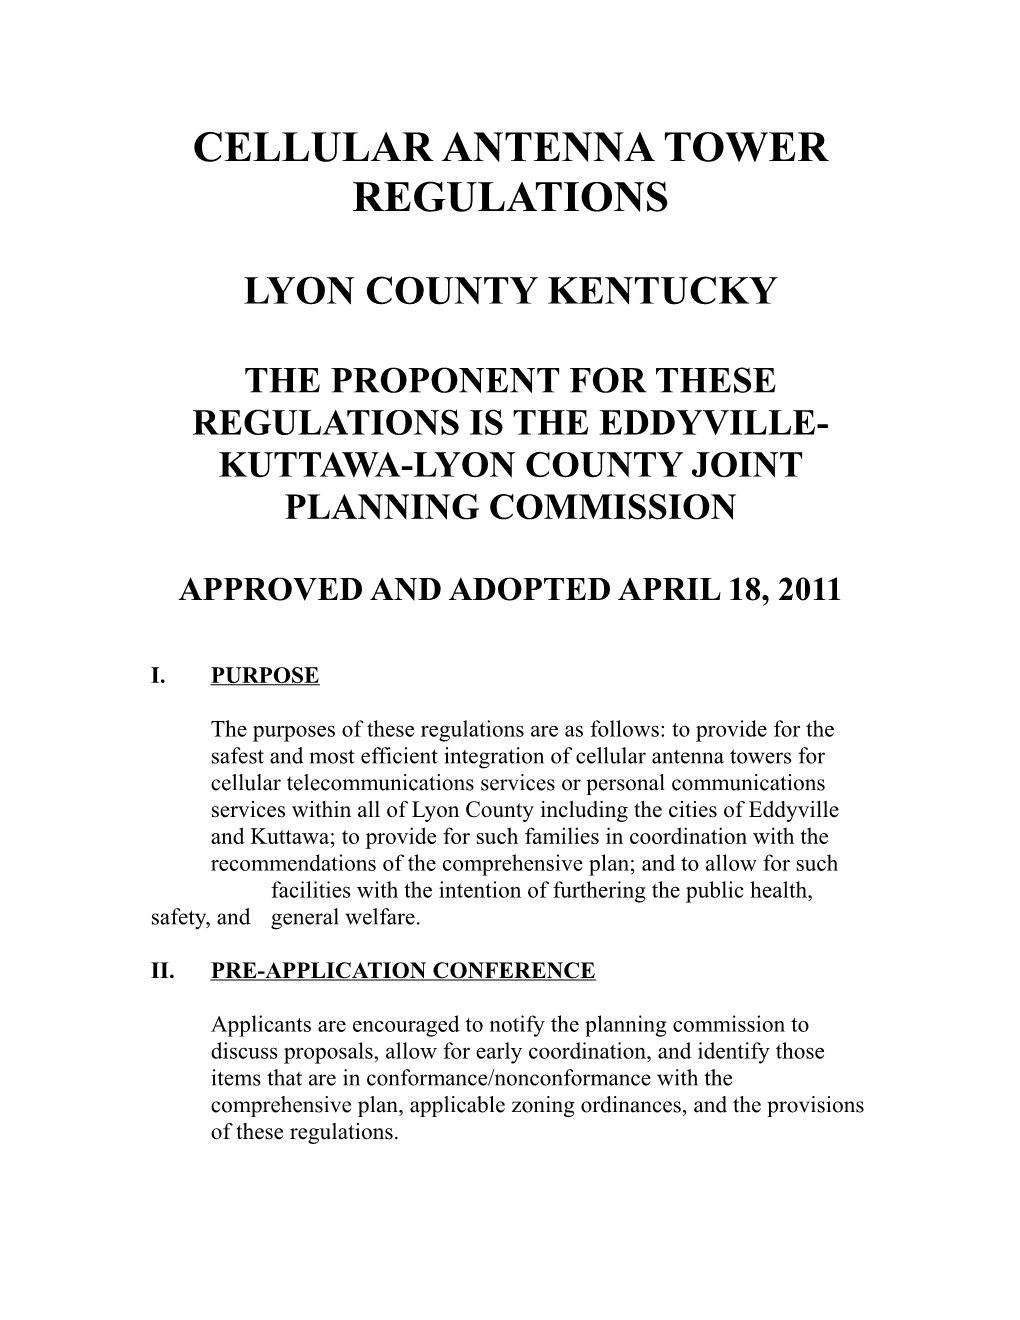 Cellular Antenna Tower Regulations